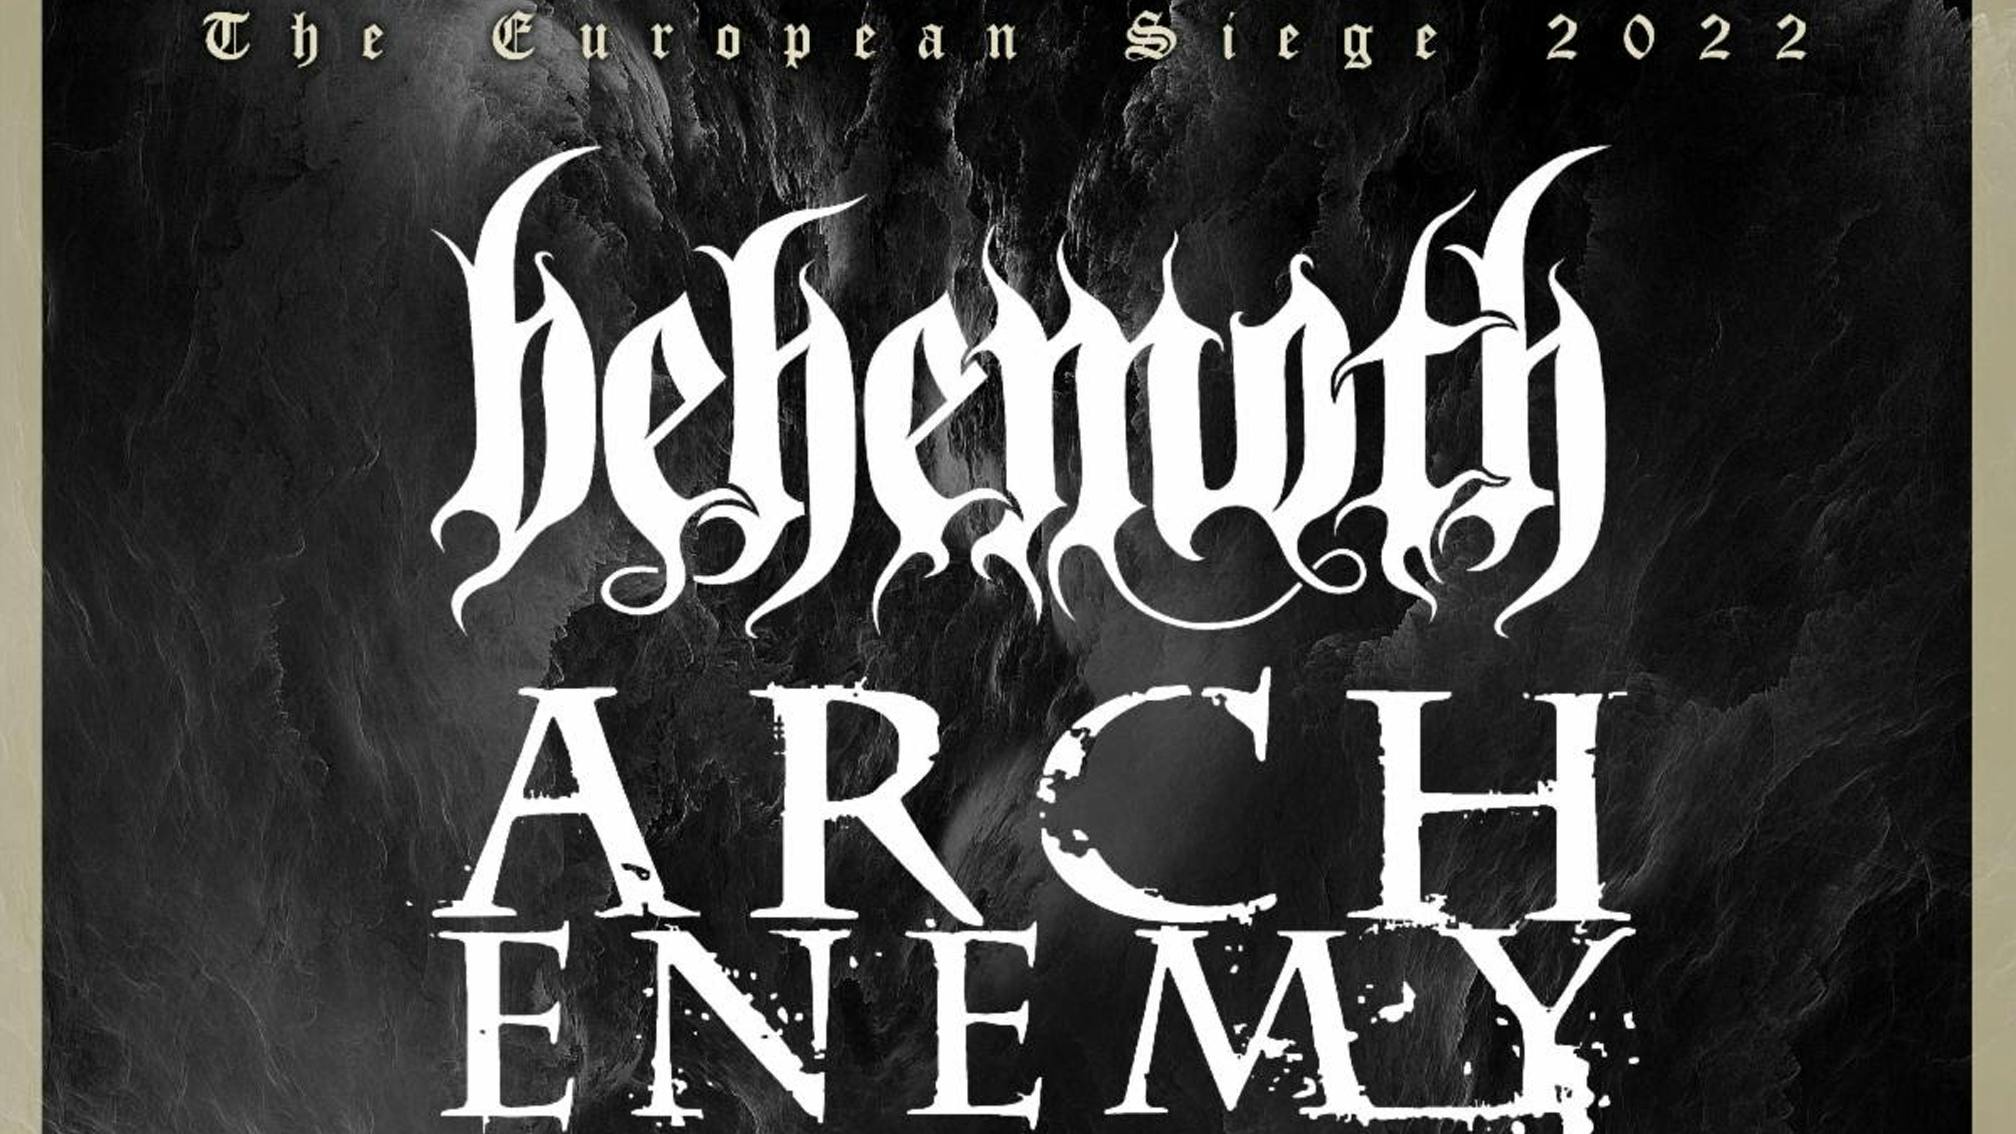 Behemoth and Arch Enemy postpone European Siege tour to 2022